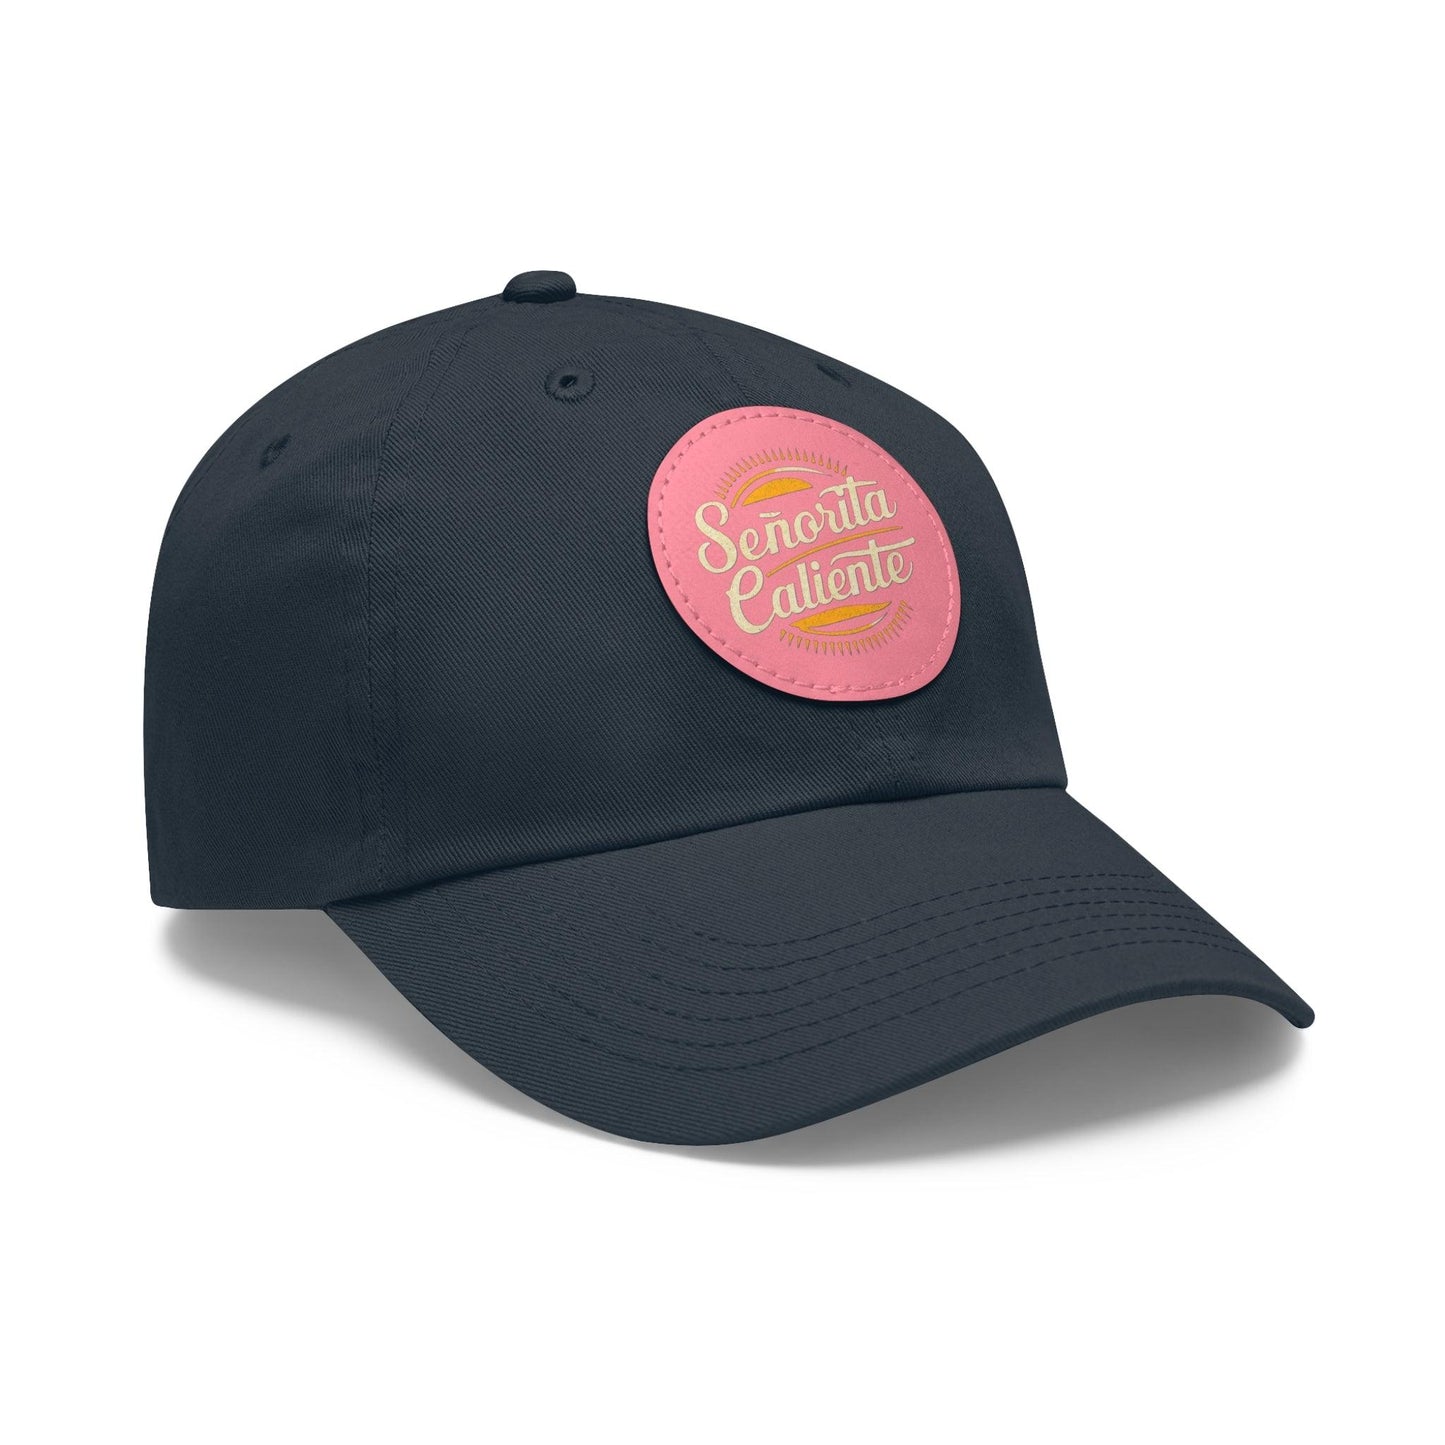 Senorita Caliente Cap, Beach Hair Day Hat for Hot Moms, Beach Inspired Cap - Coastal Collections